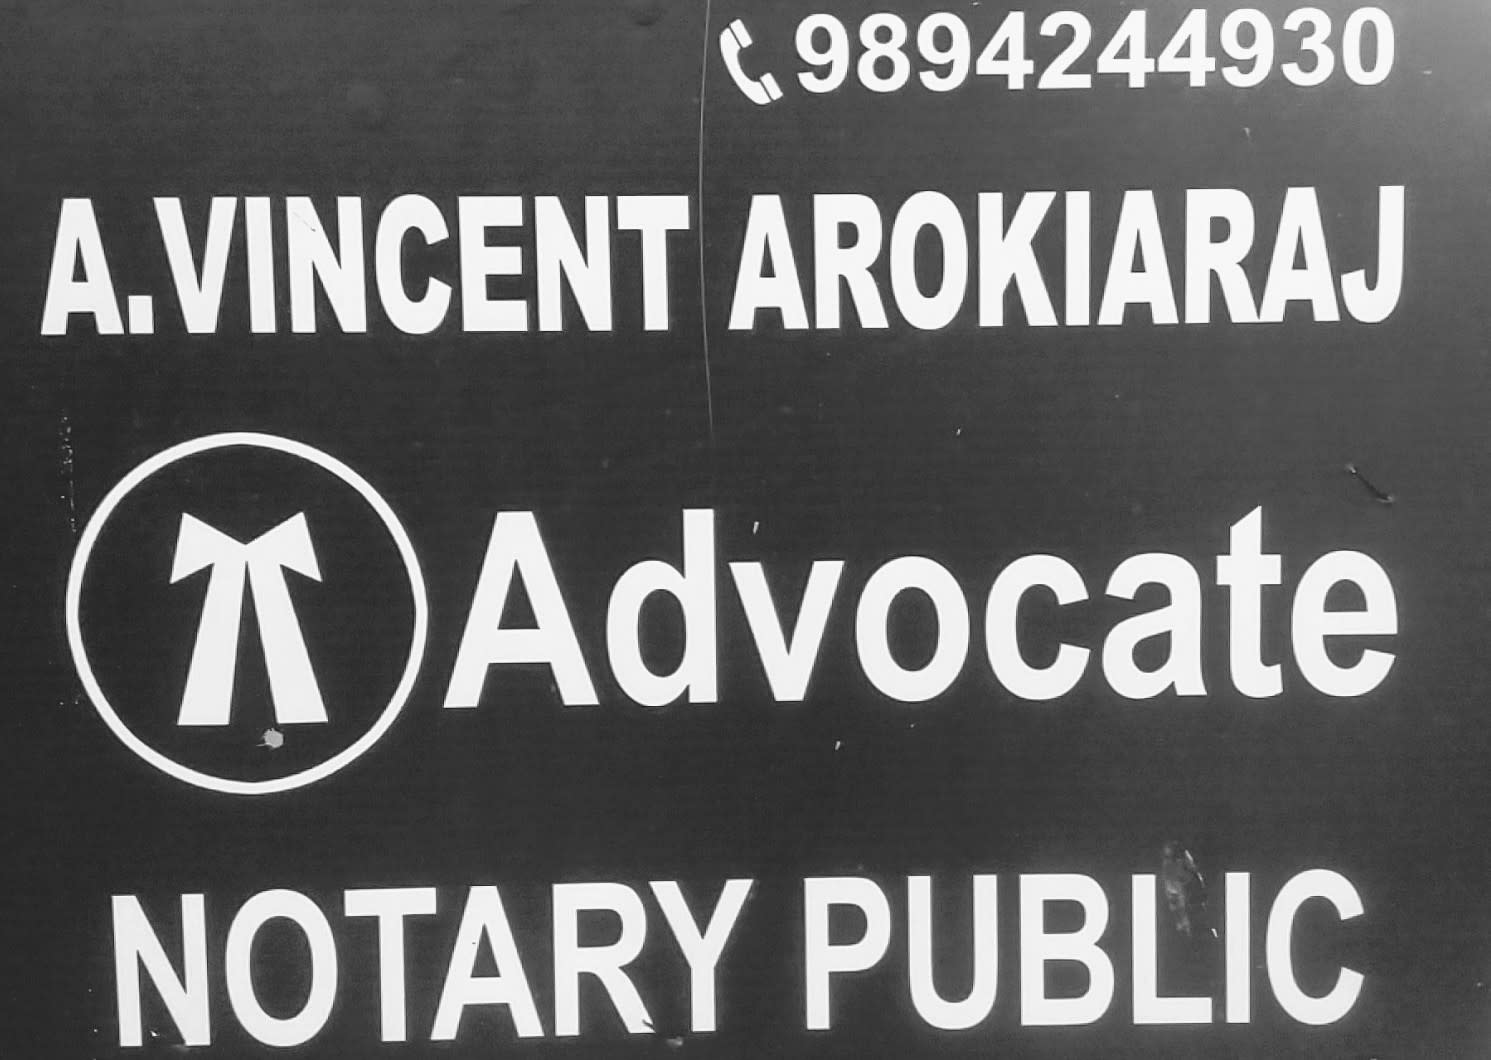 Vincent Arokiaraj Advocate Notary Public